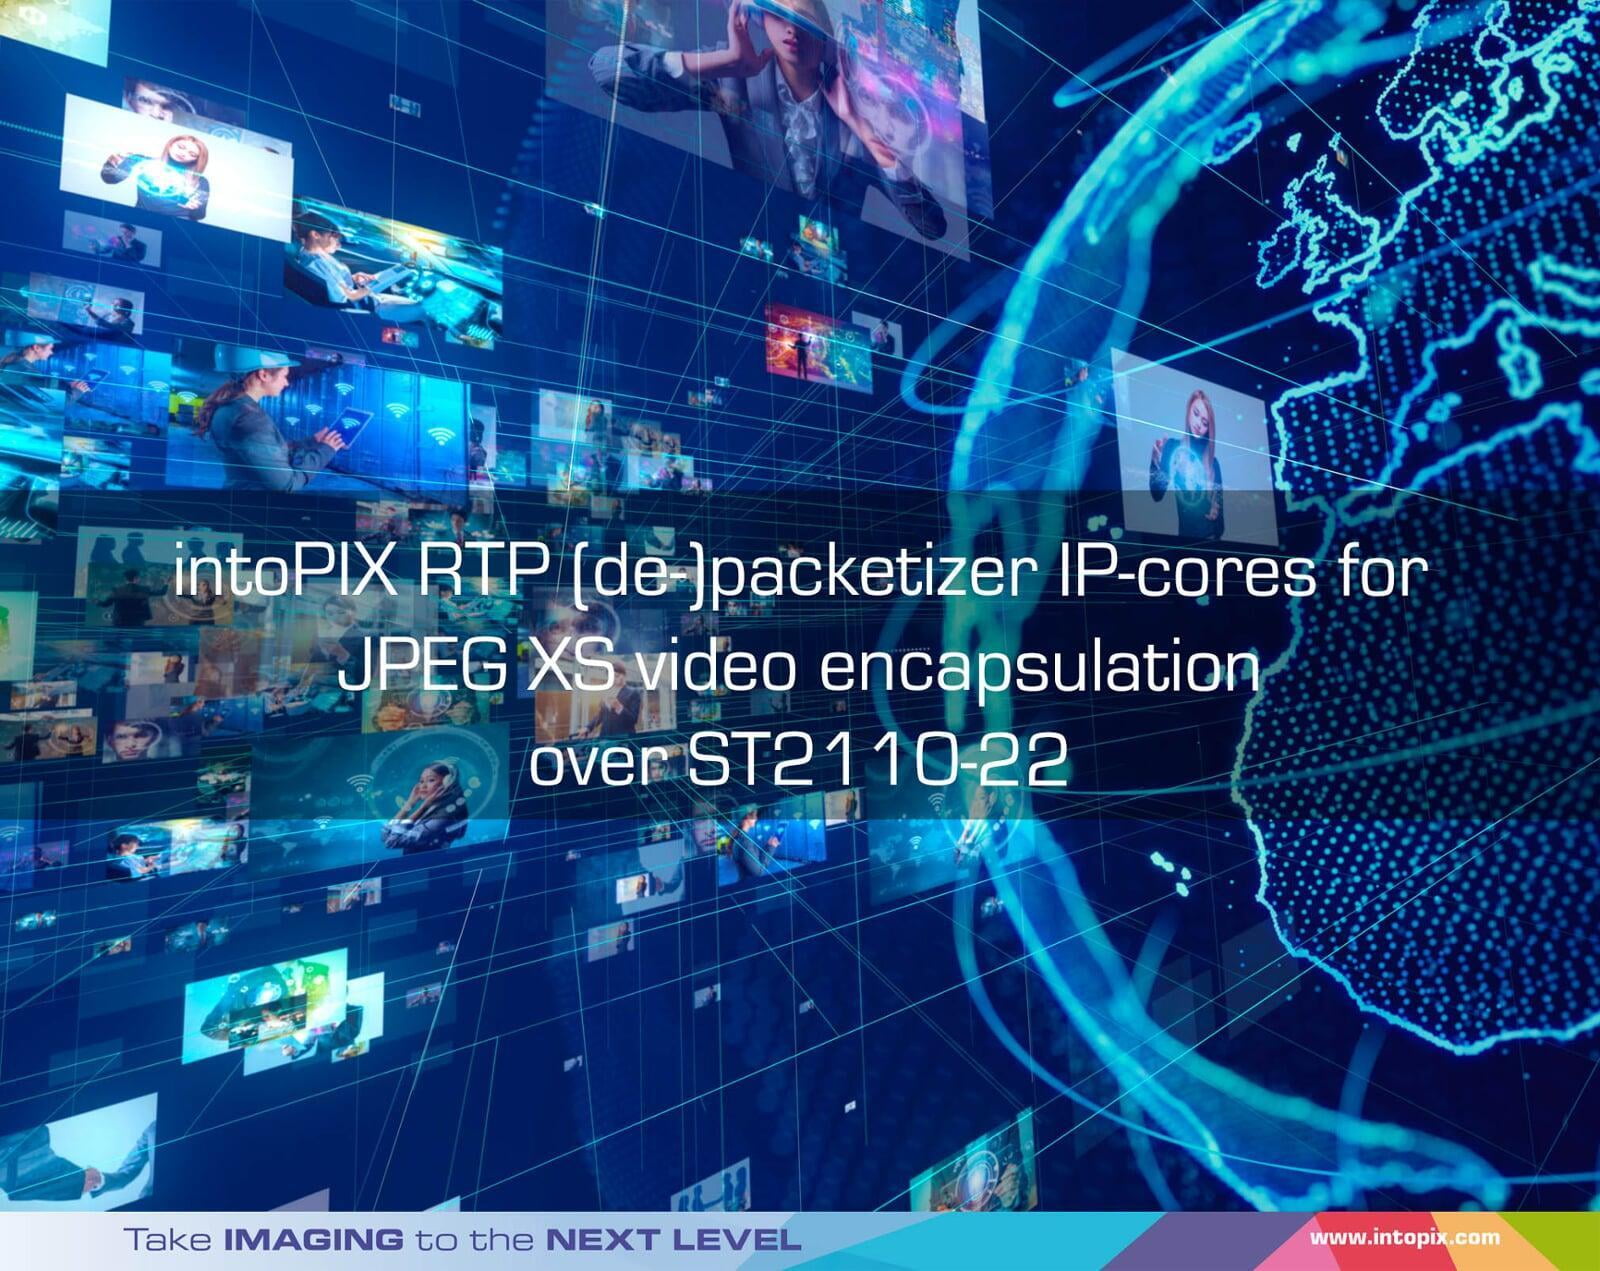 intoPIX 发布RTP打包IP-cores forJPEG XS视频封装过SMPTE 2110-22